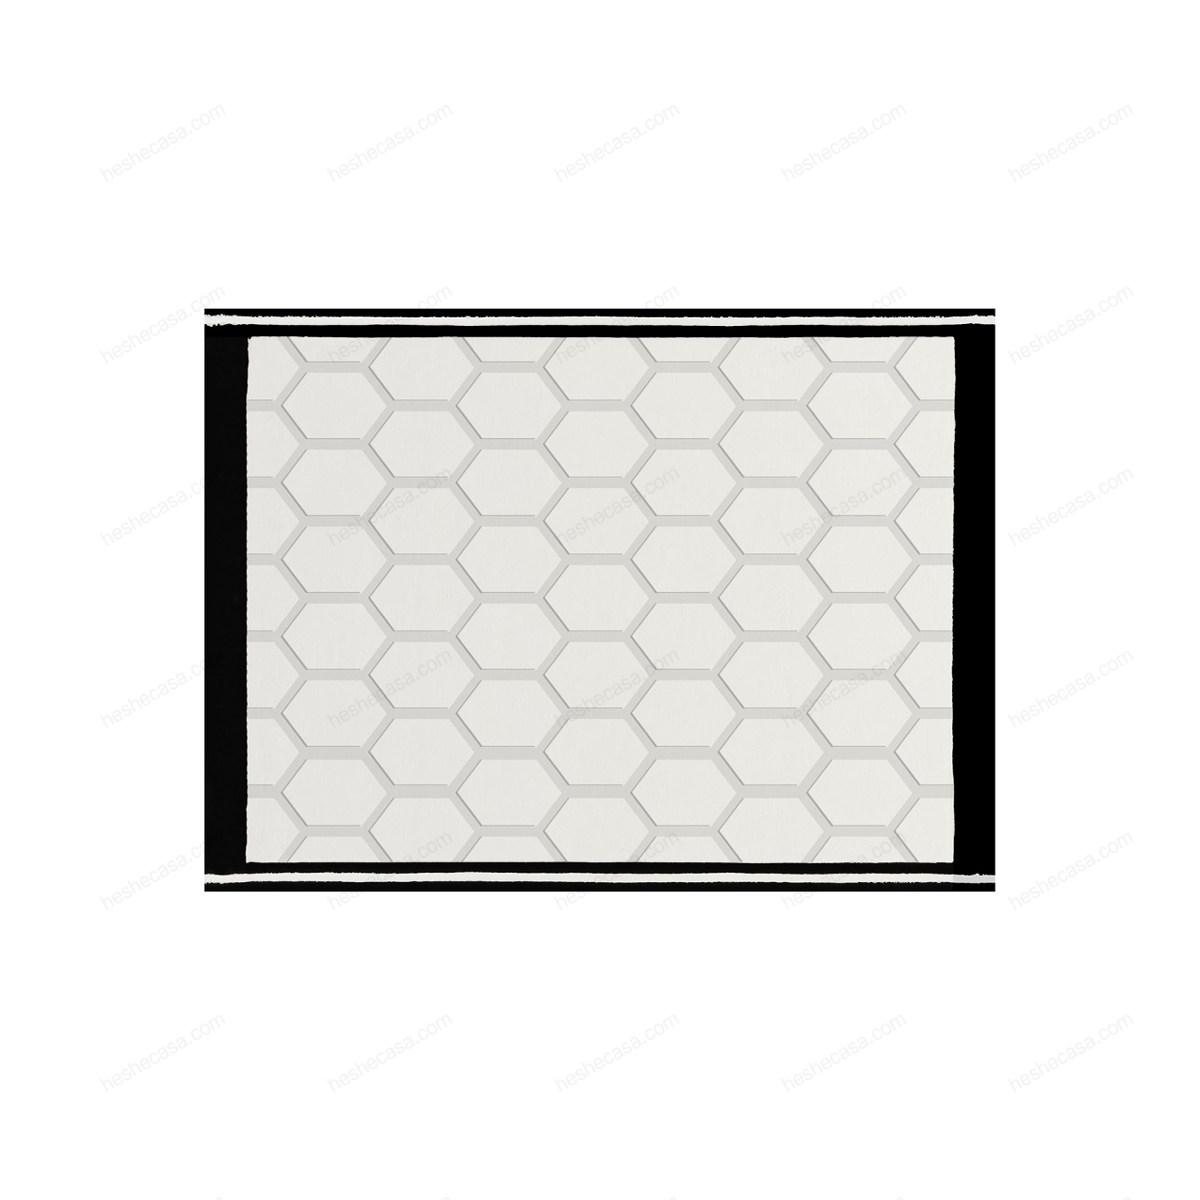 Bee地毯